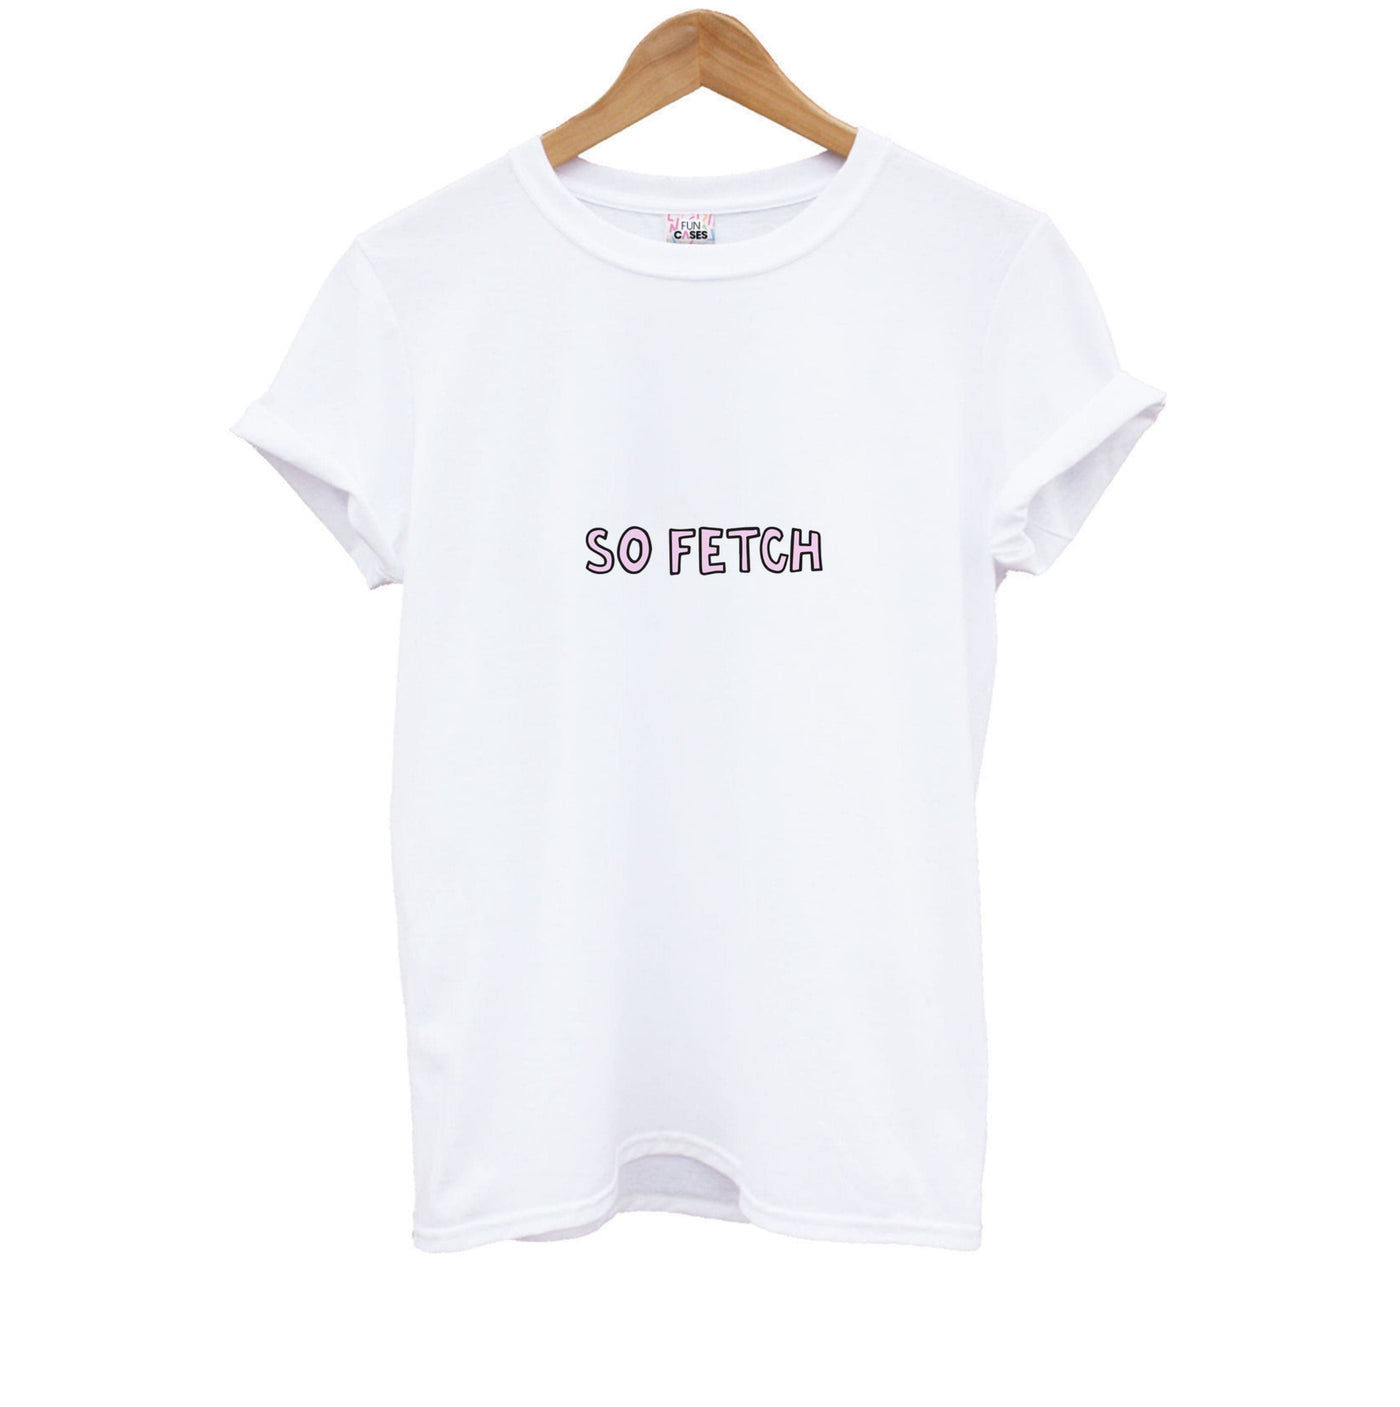 So Fetch - Mean Girls Kids T-Shirt